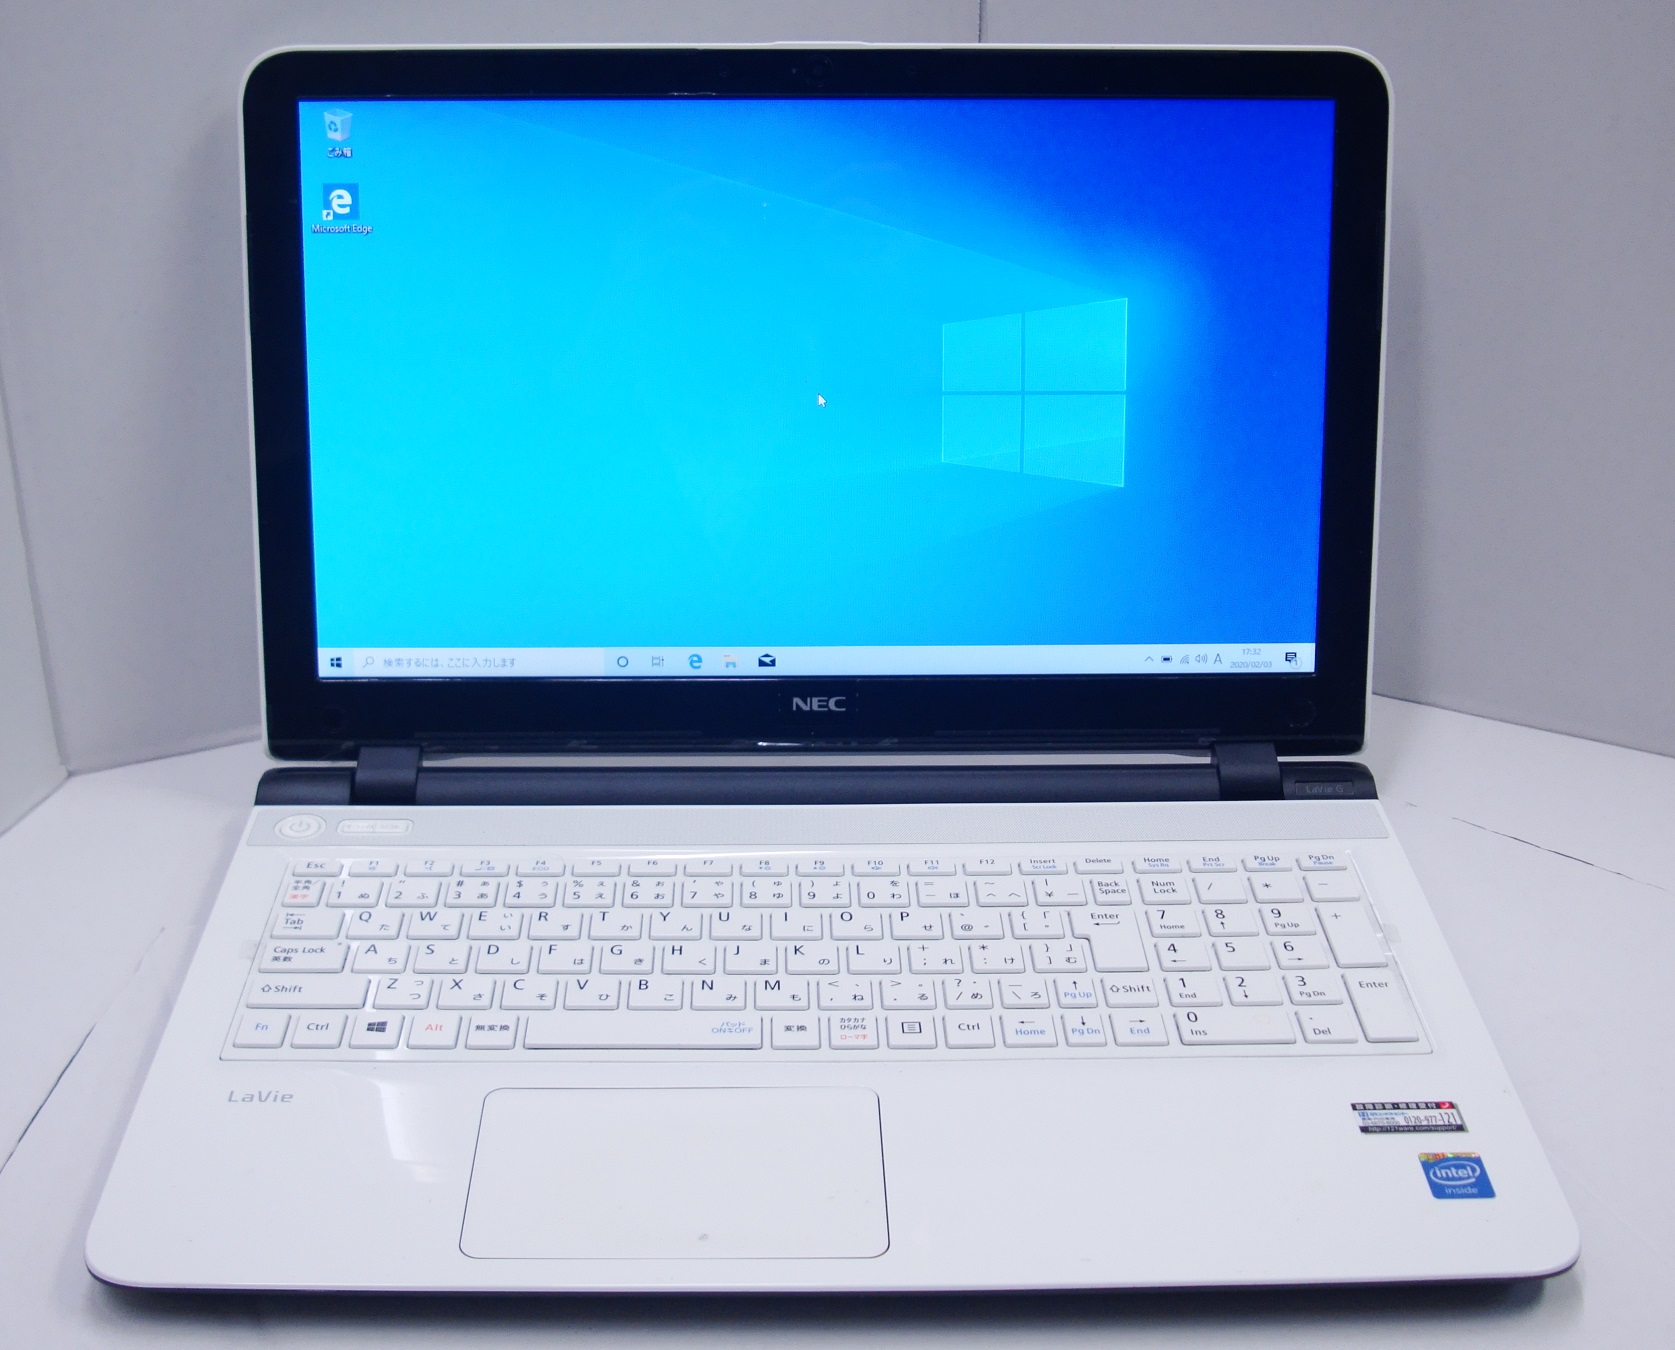 NEC LaVie PC-GN14 CPU:Celeron 2957U 1.40GHz / メモリ:4GB / HDD:500GB / DVD